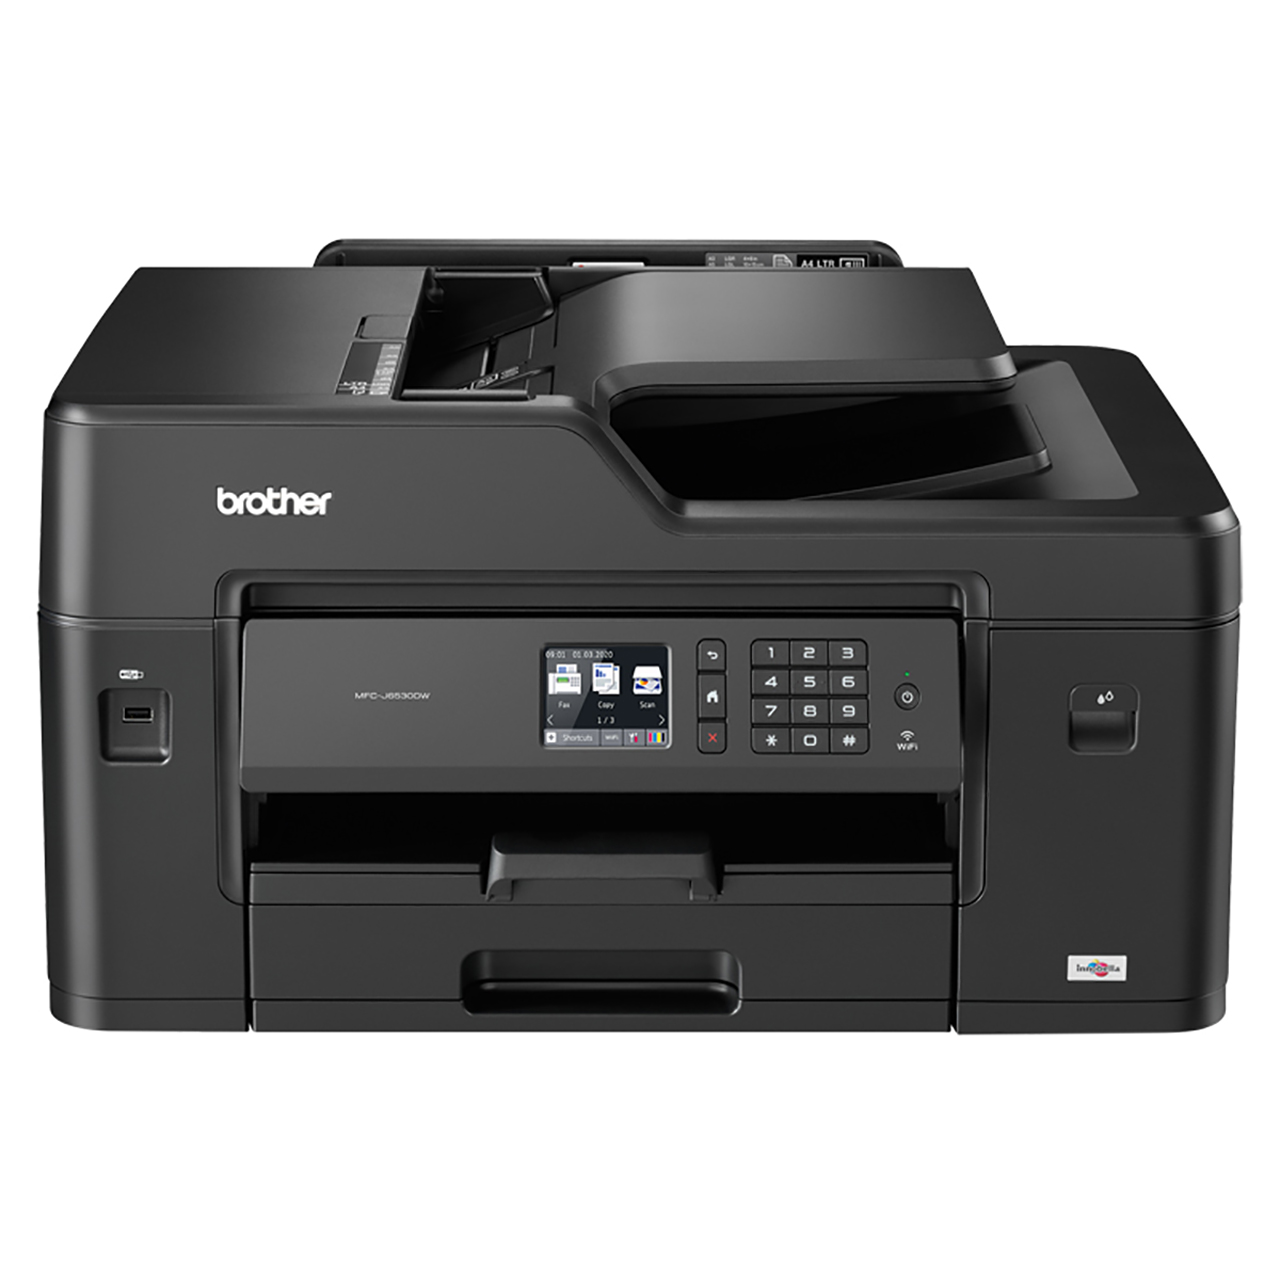 Brother A3 Inkjet Multi-Function Printer MFC-J6530DW